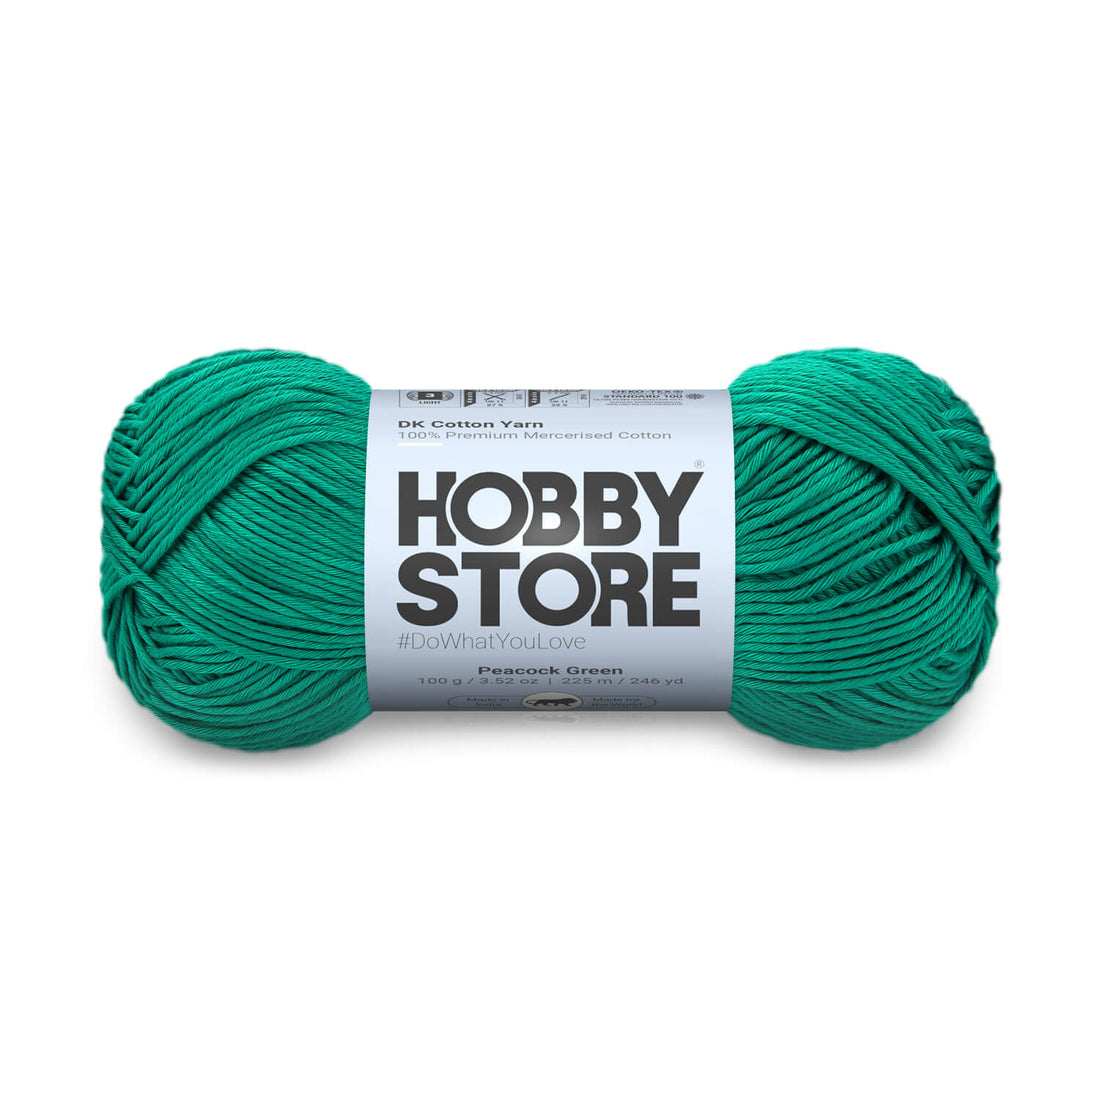 DK Mercerised Cotton Yarn by Hobby Store - Peacock Green - 336